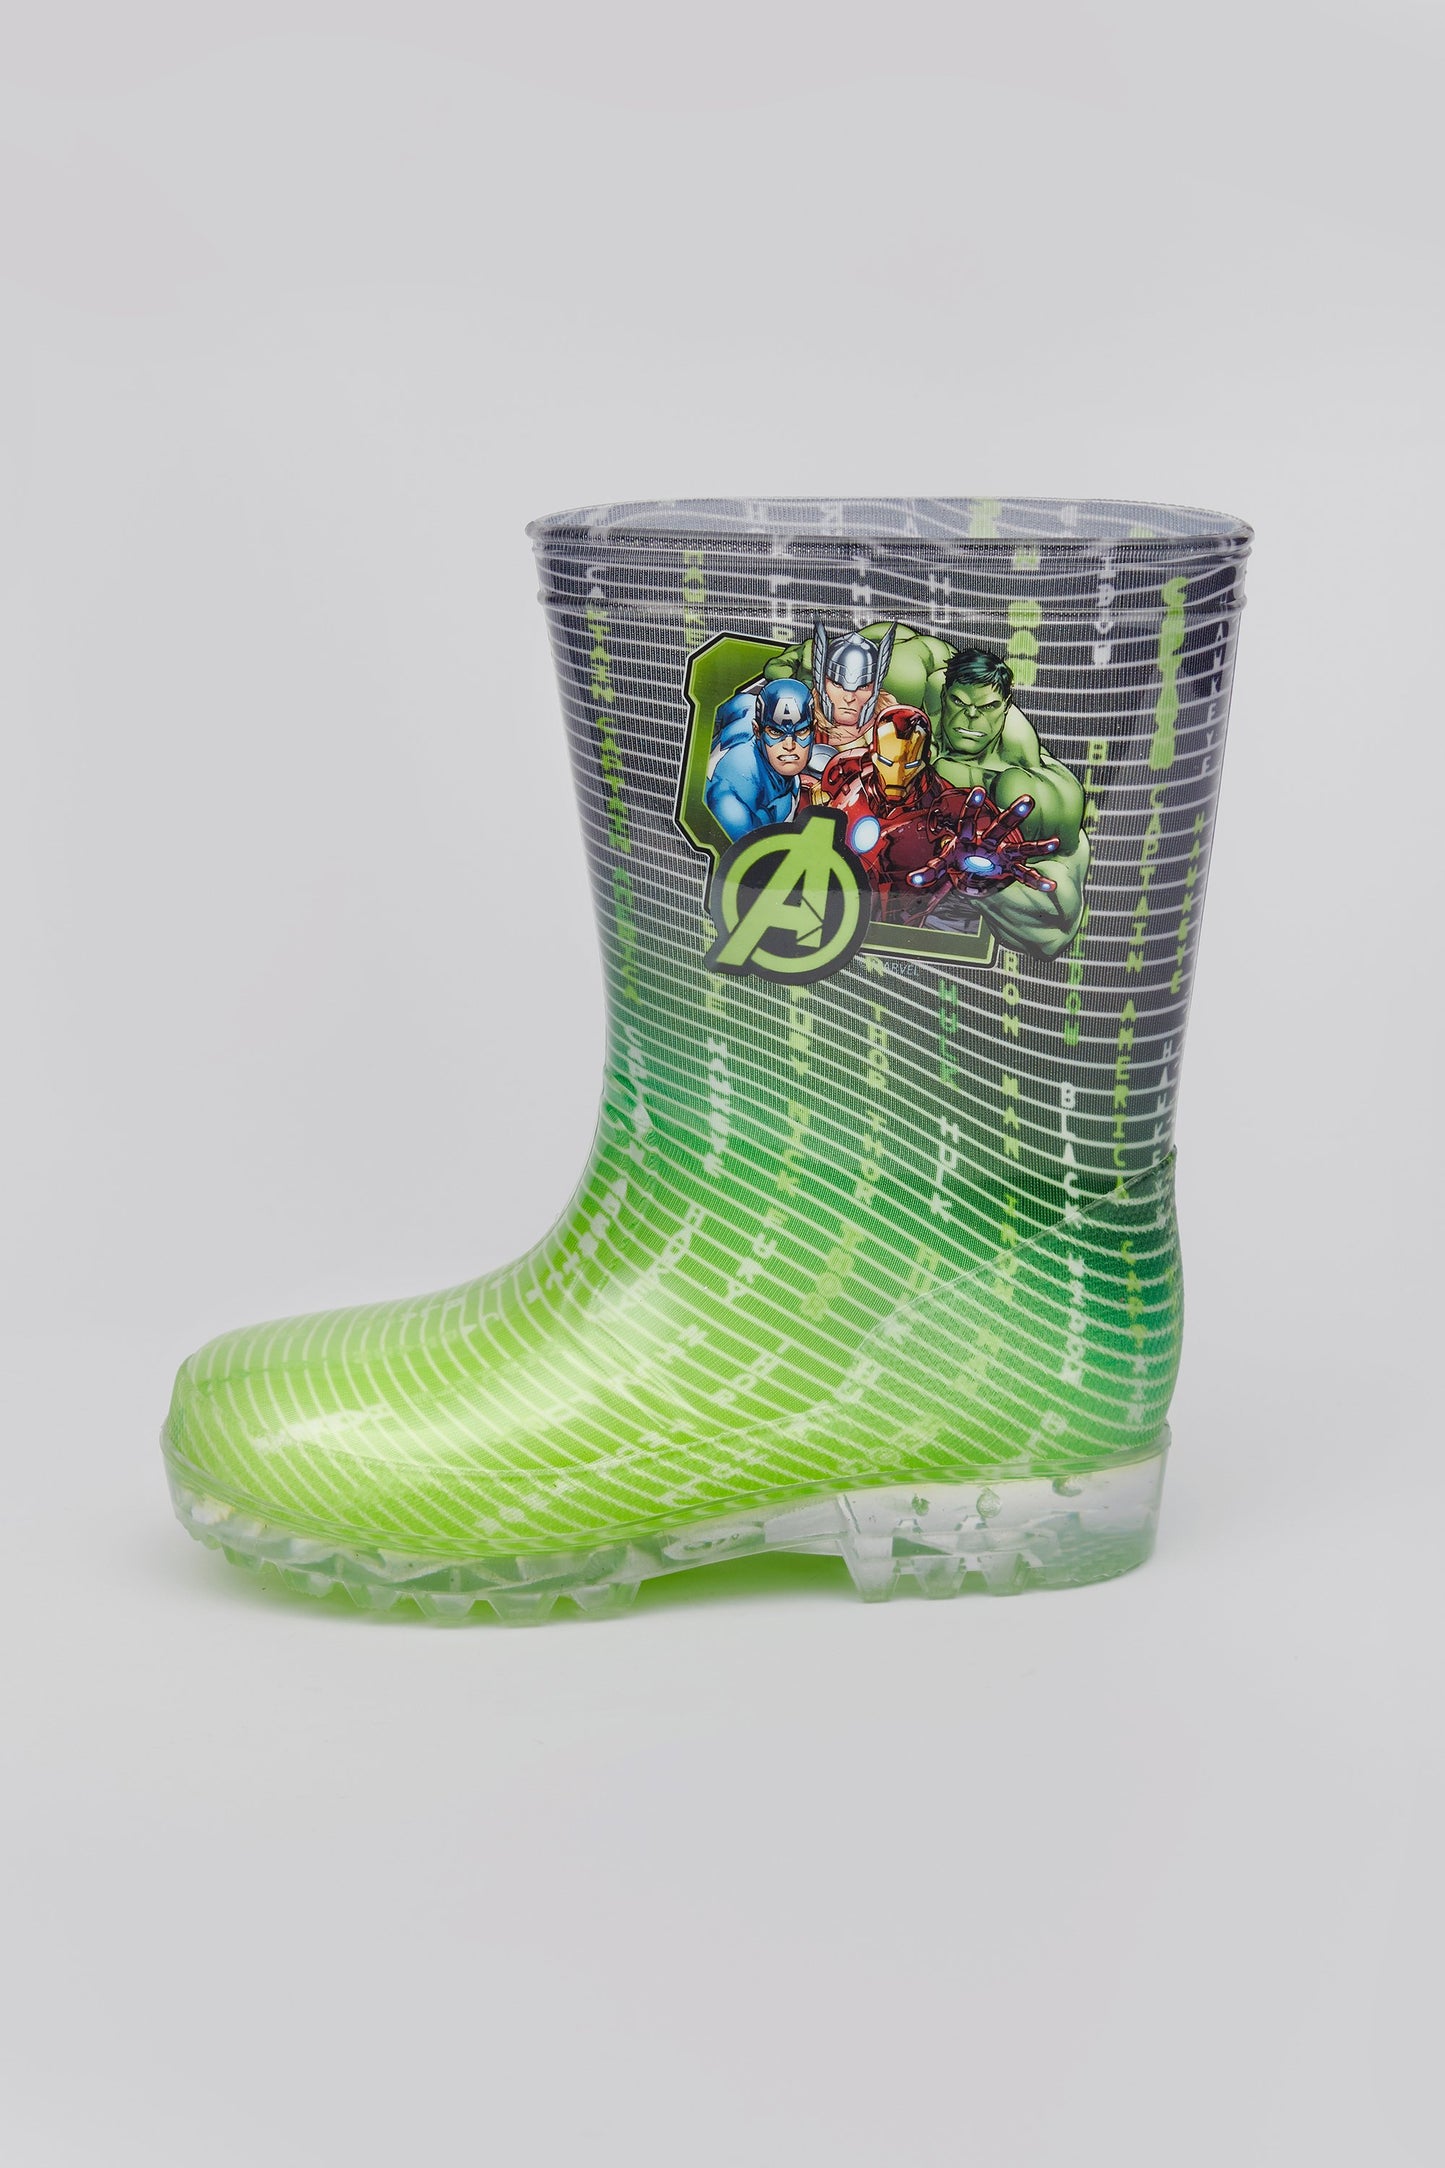 Marvel Avengers Boys Wellies/Wellington Boots/Rain Boots